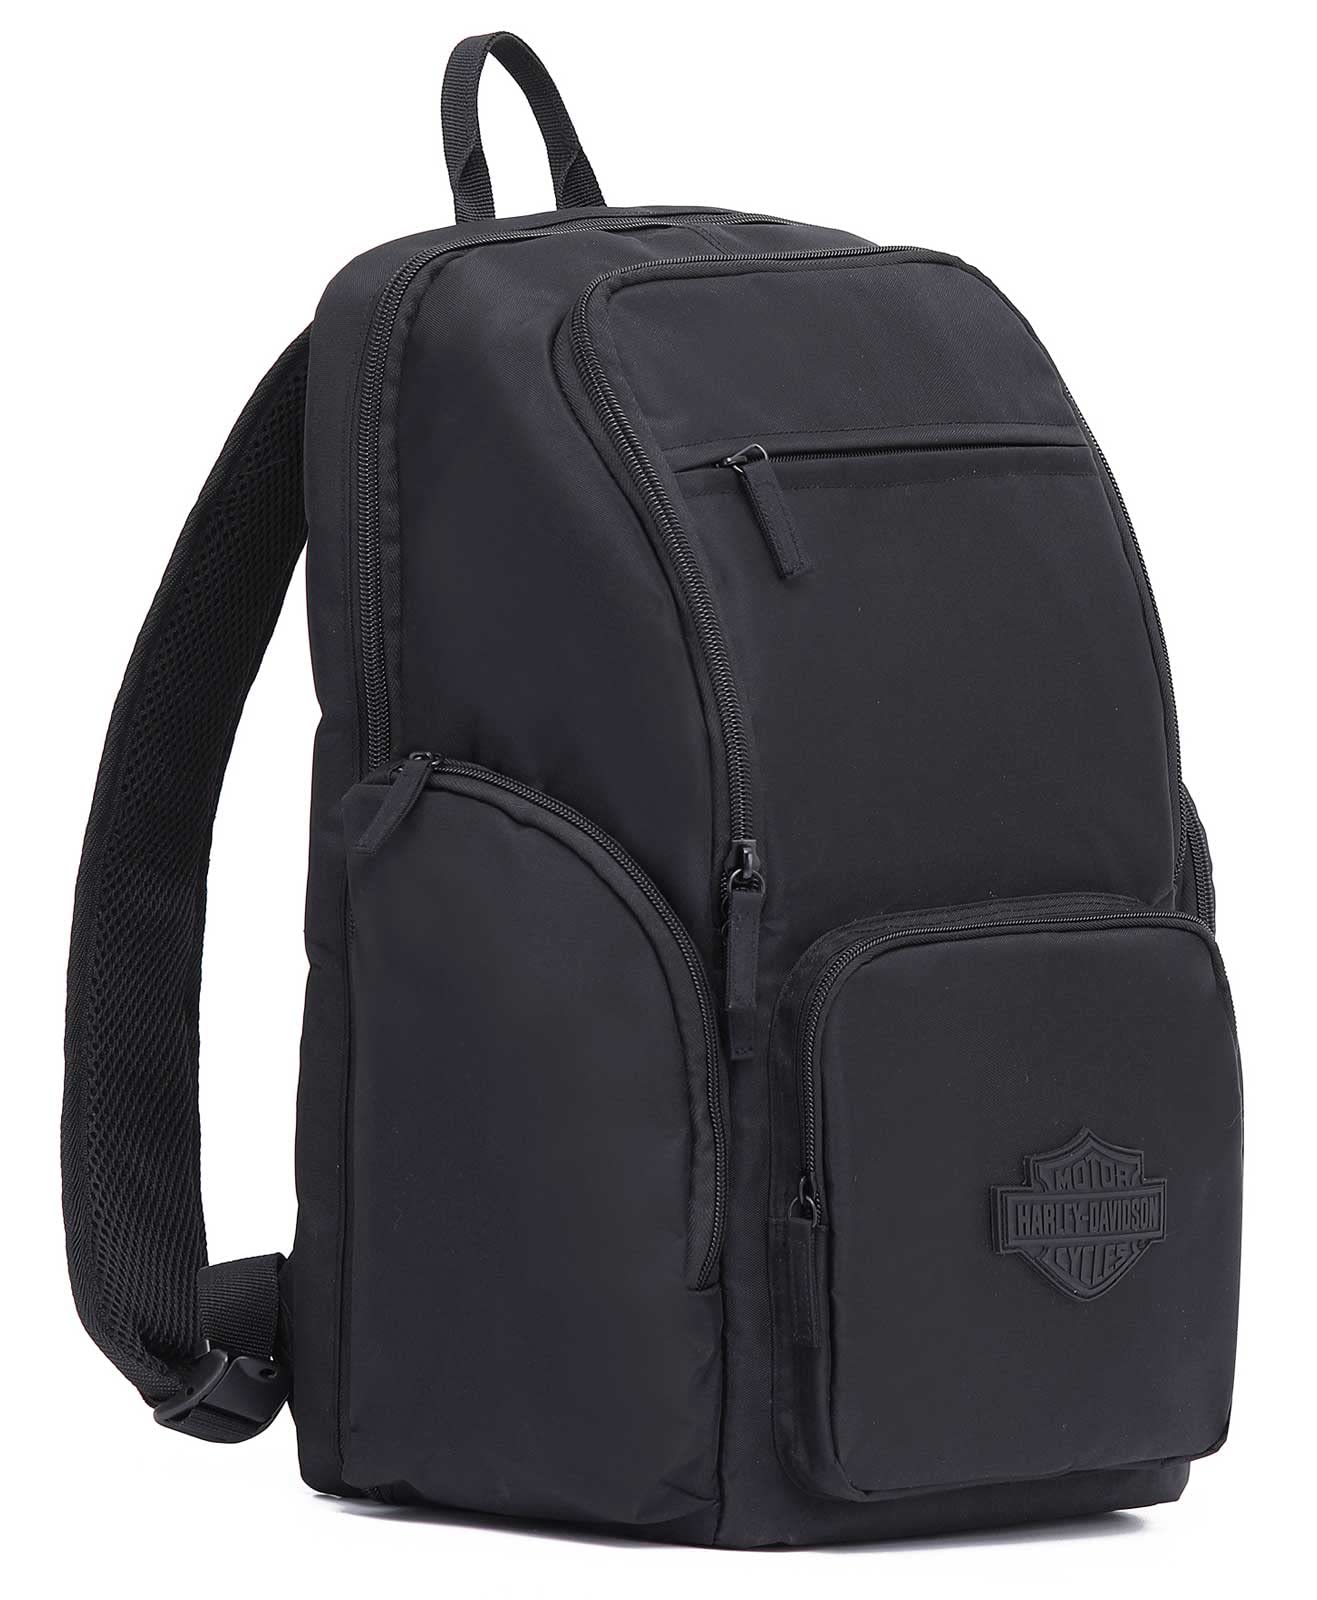 Harley-Davidson Bar & Shield Crinkle Nylon Water-Resistant Backpack - Black